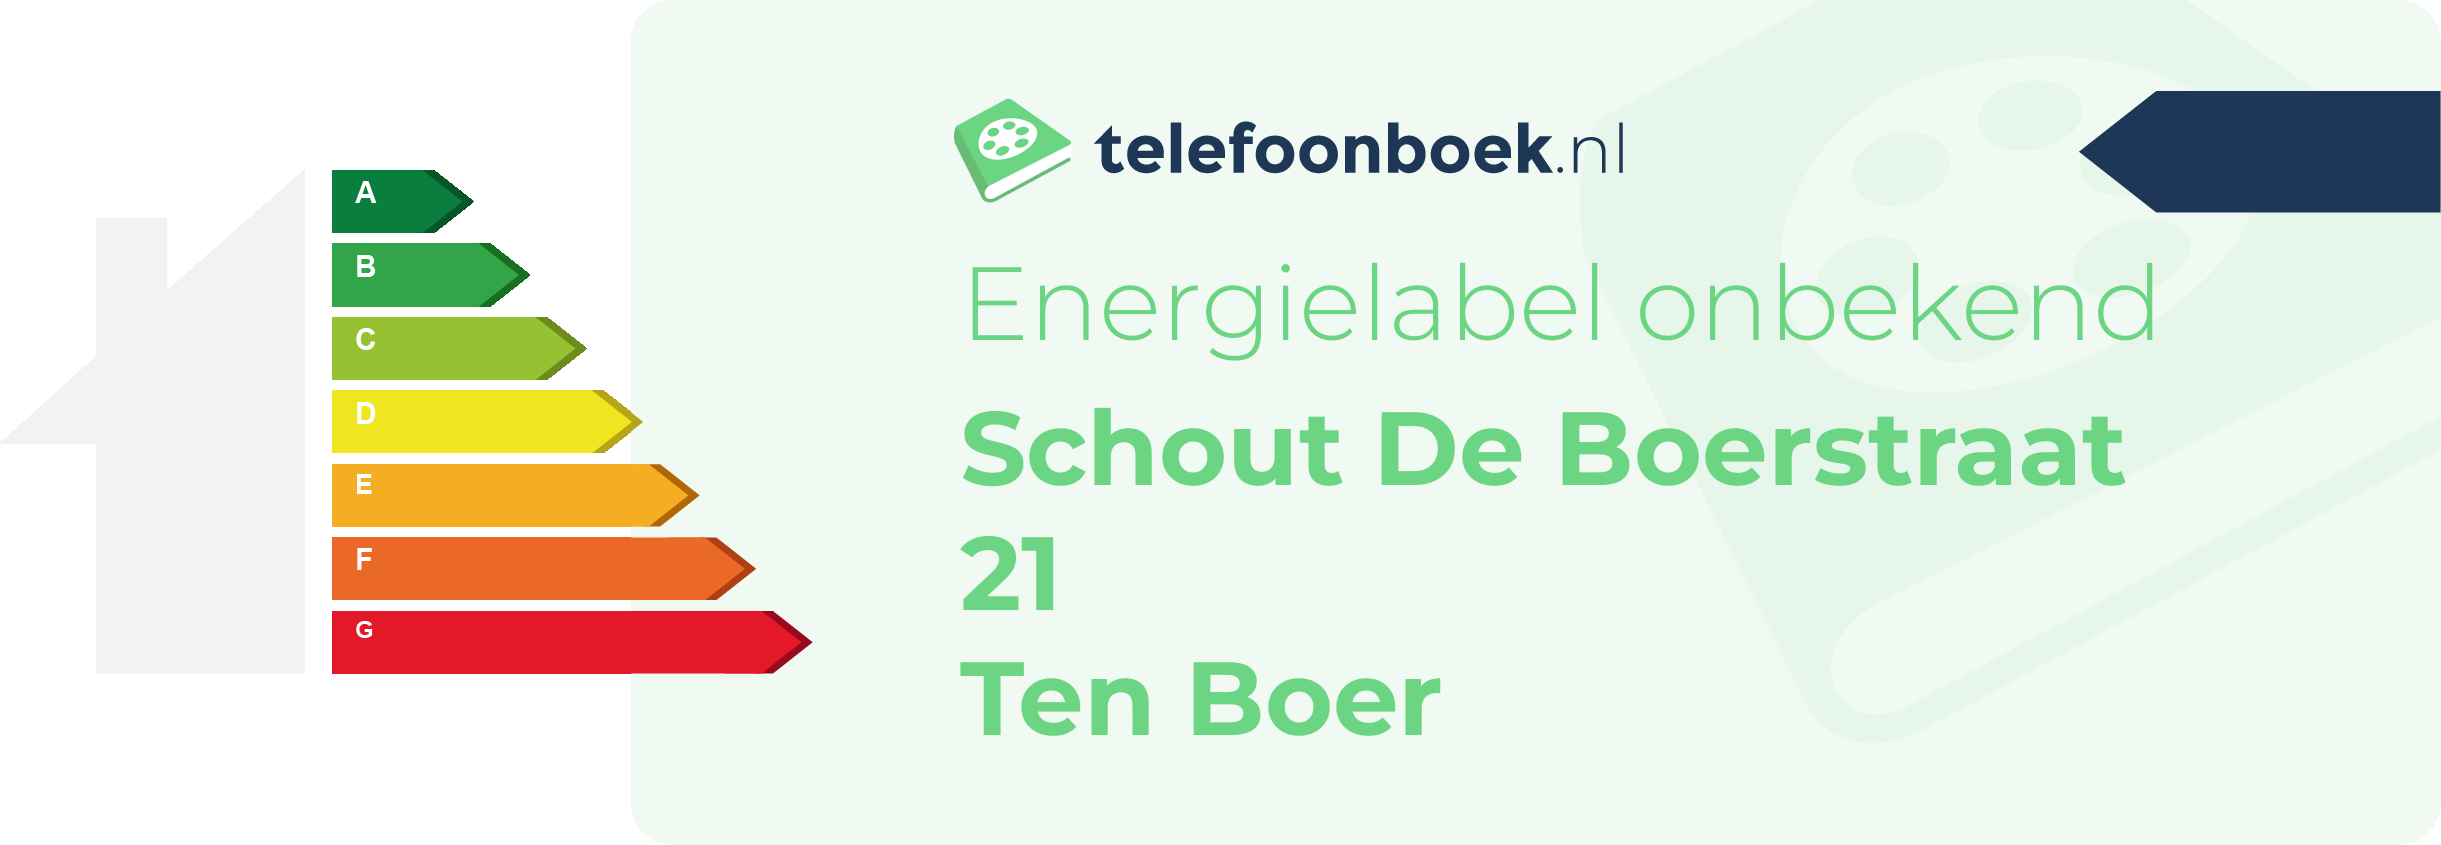 Energielabel Schout De Boerstraat 21 Ten Boer